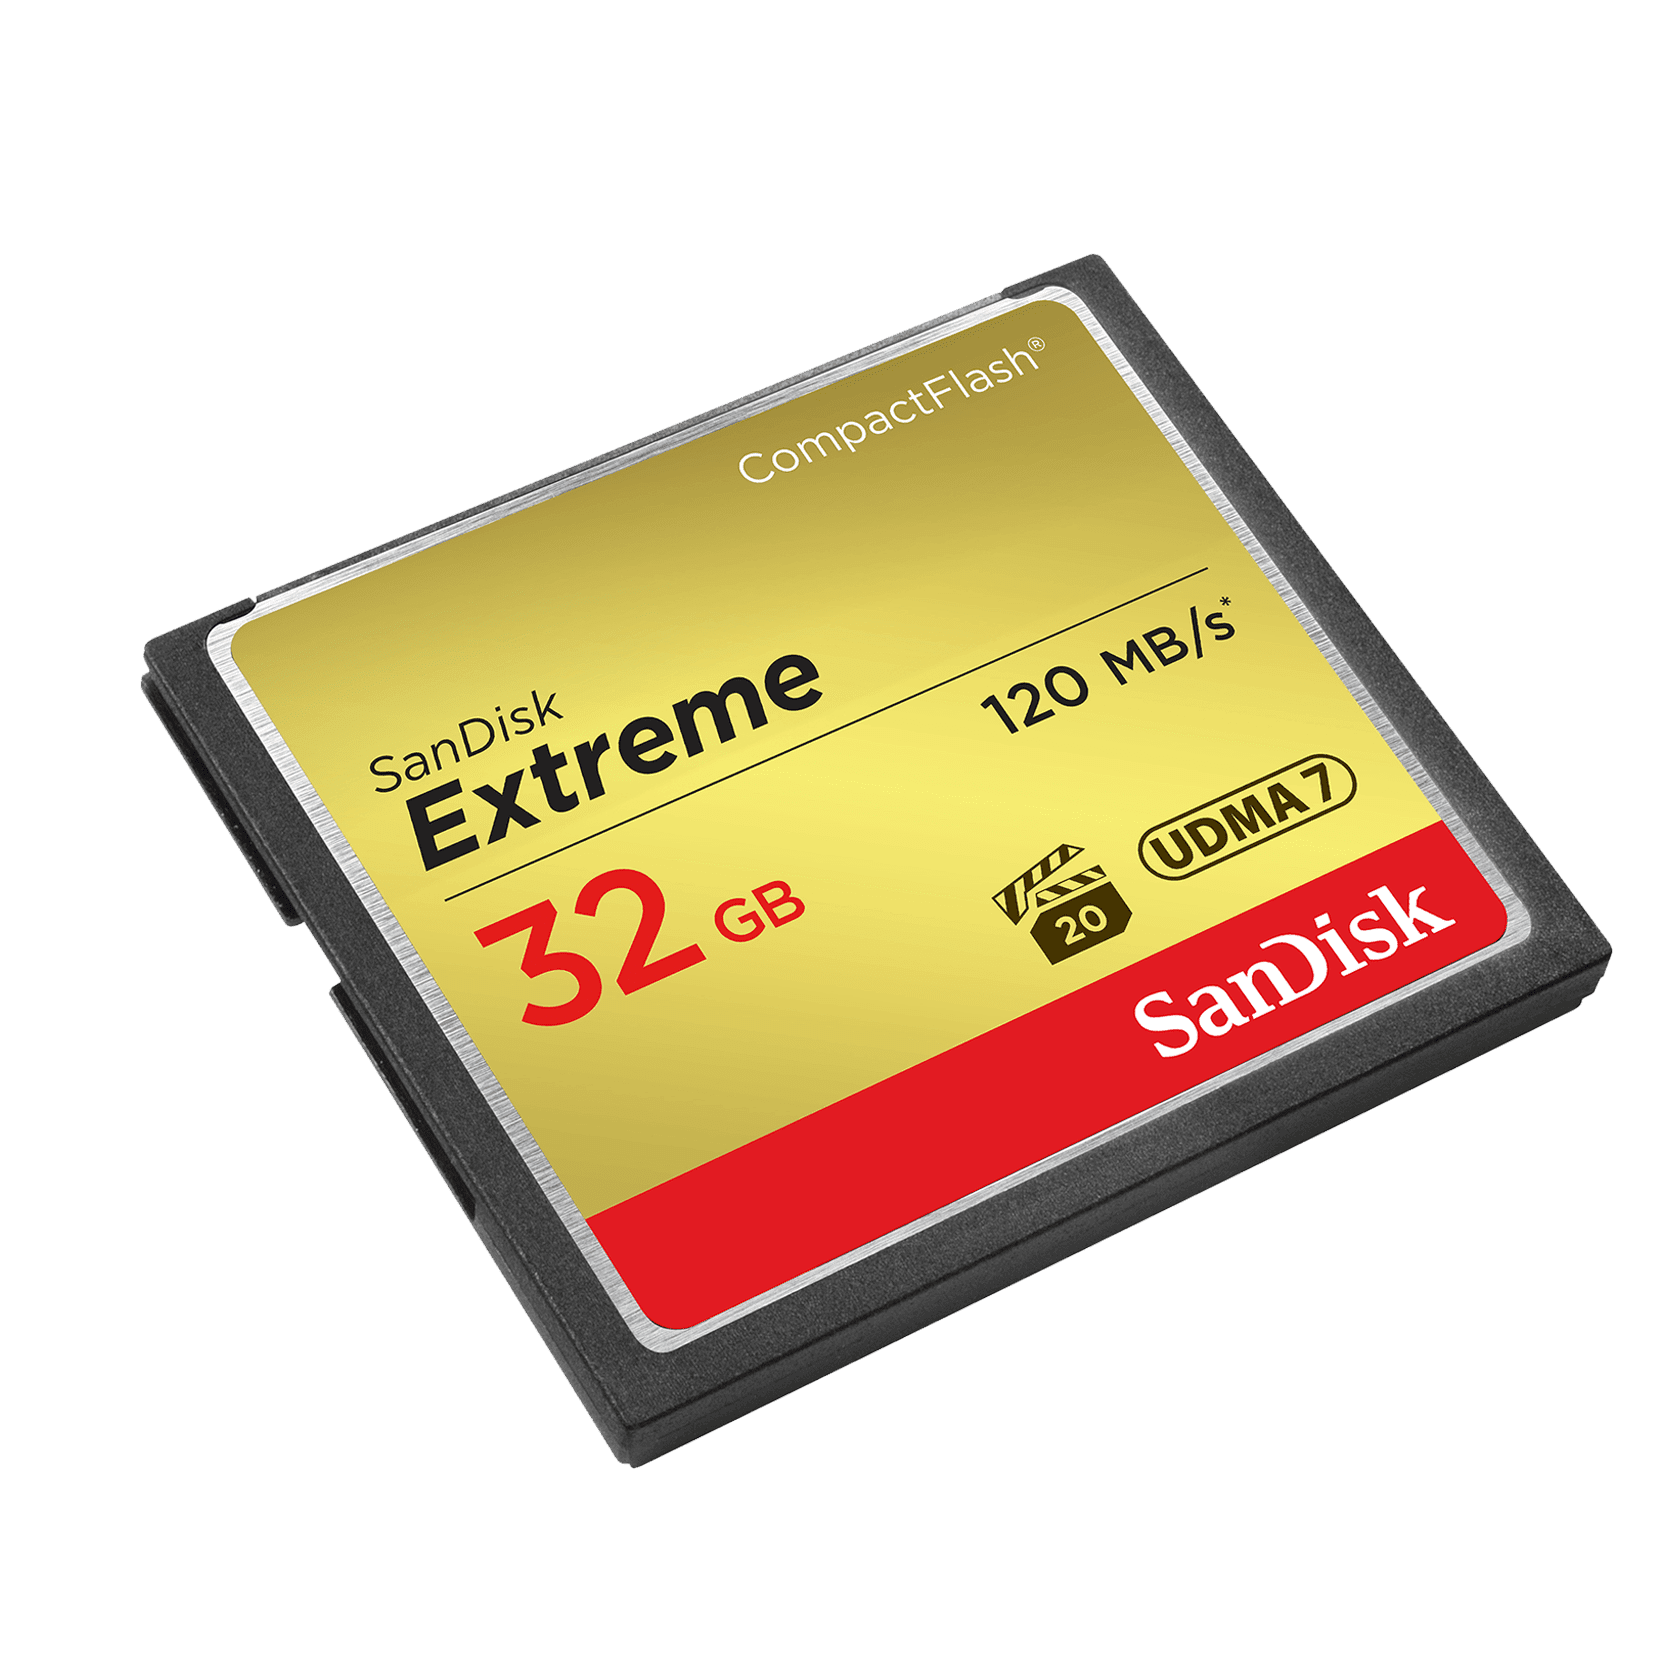 30 x 64MB Industrial Compactflash Memory Cards Bulk Job Lot 